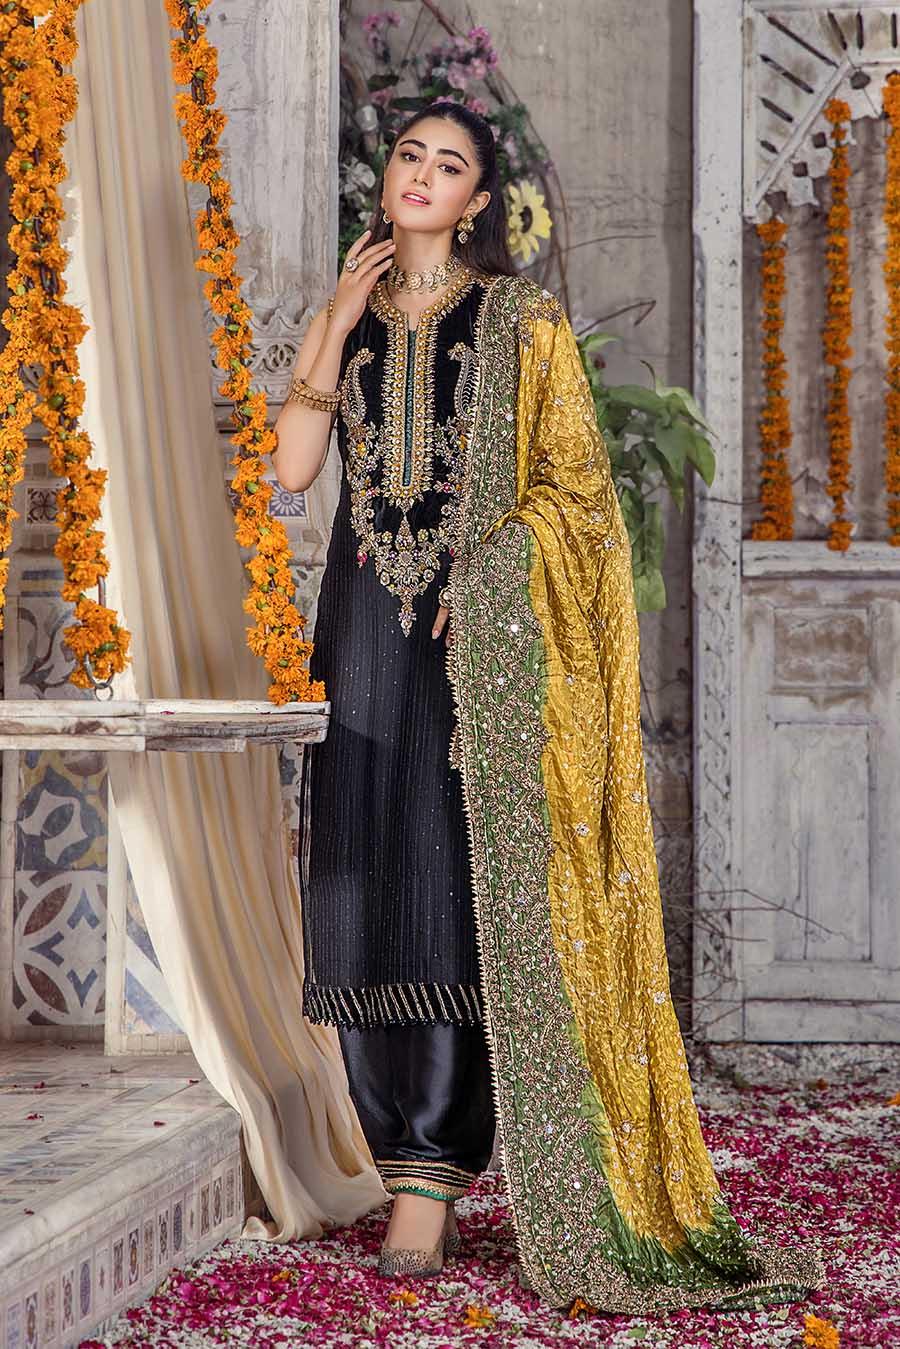 KHUDA BAKSH Pakistani Wedding Traditions | RP-241-17